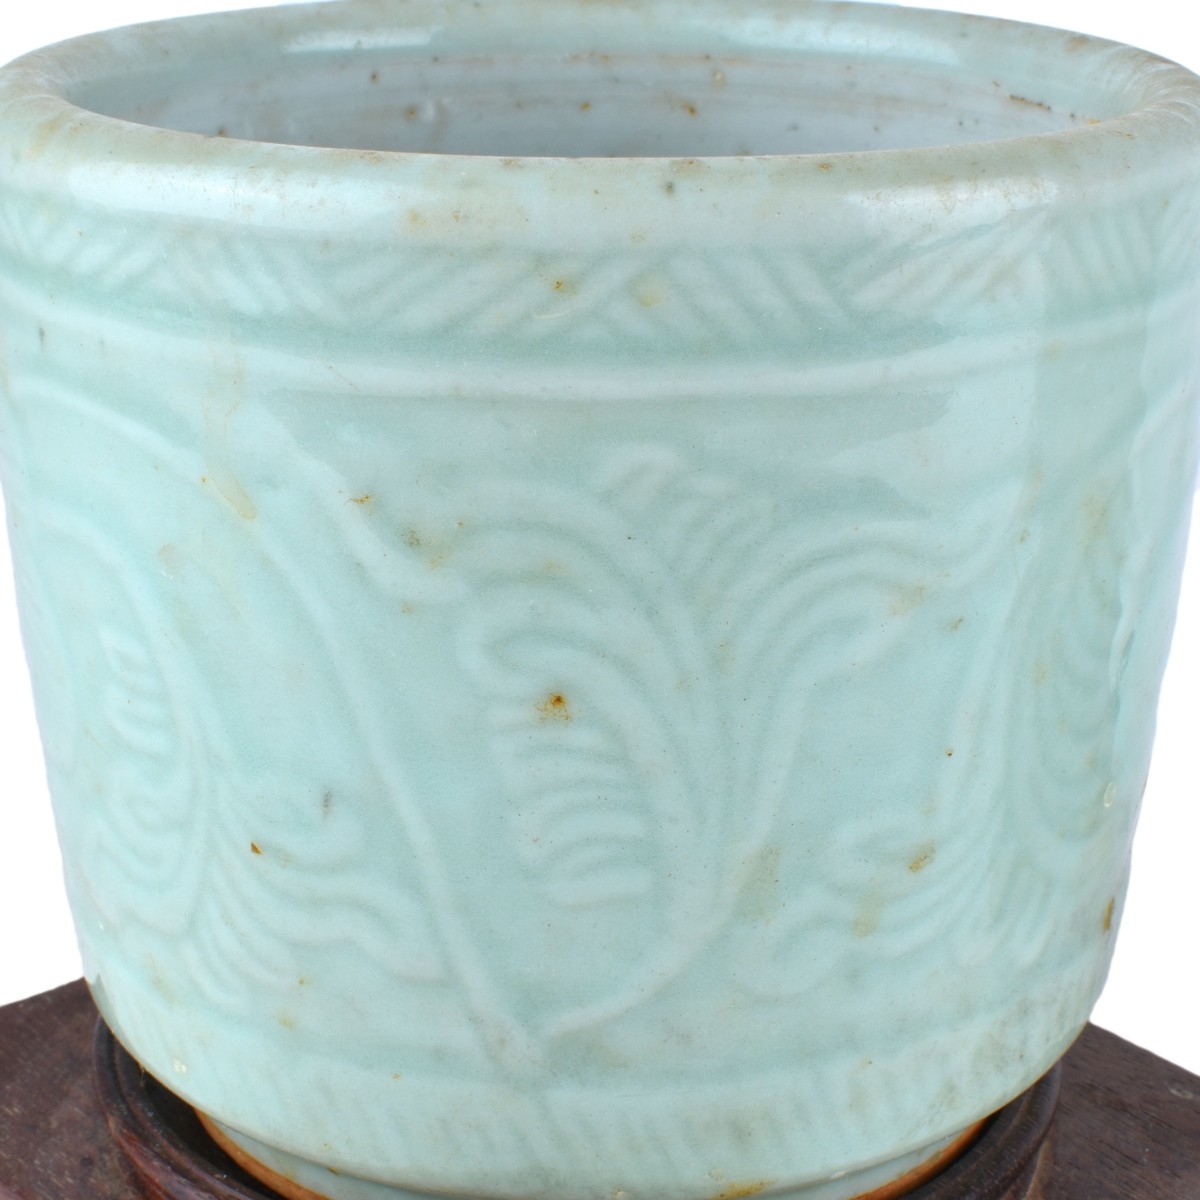 Pair of Chinese Celadon Longquan Style Jars